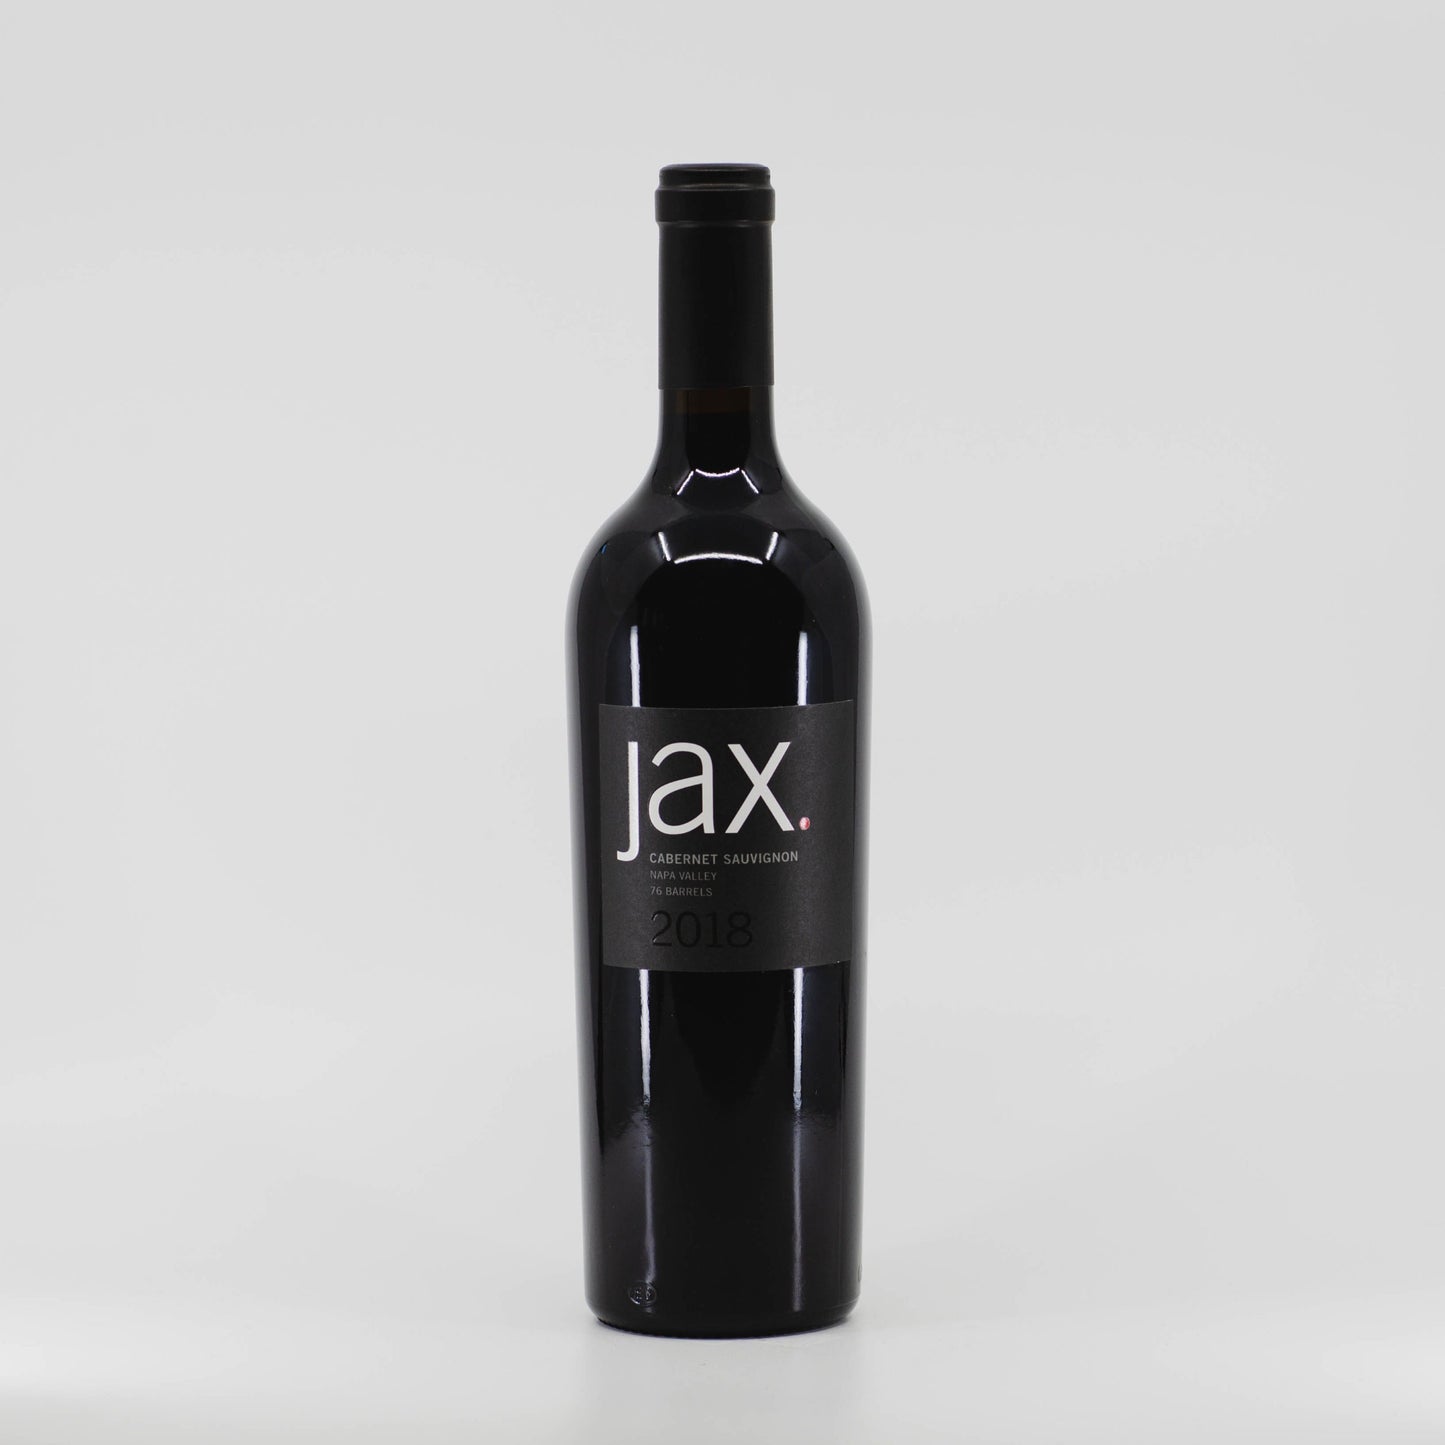 Jax 2019 Cabernet Sauvignon Calistoga